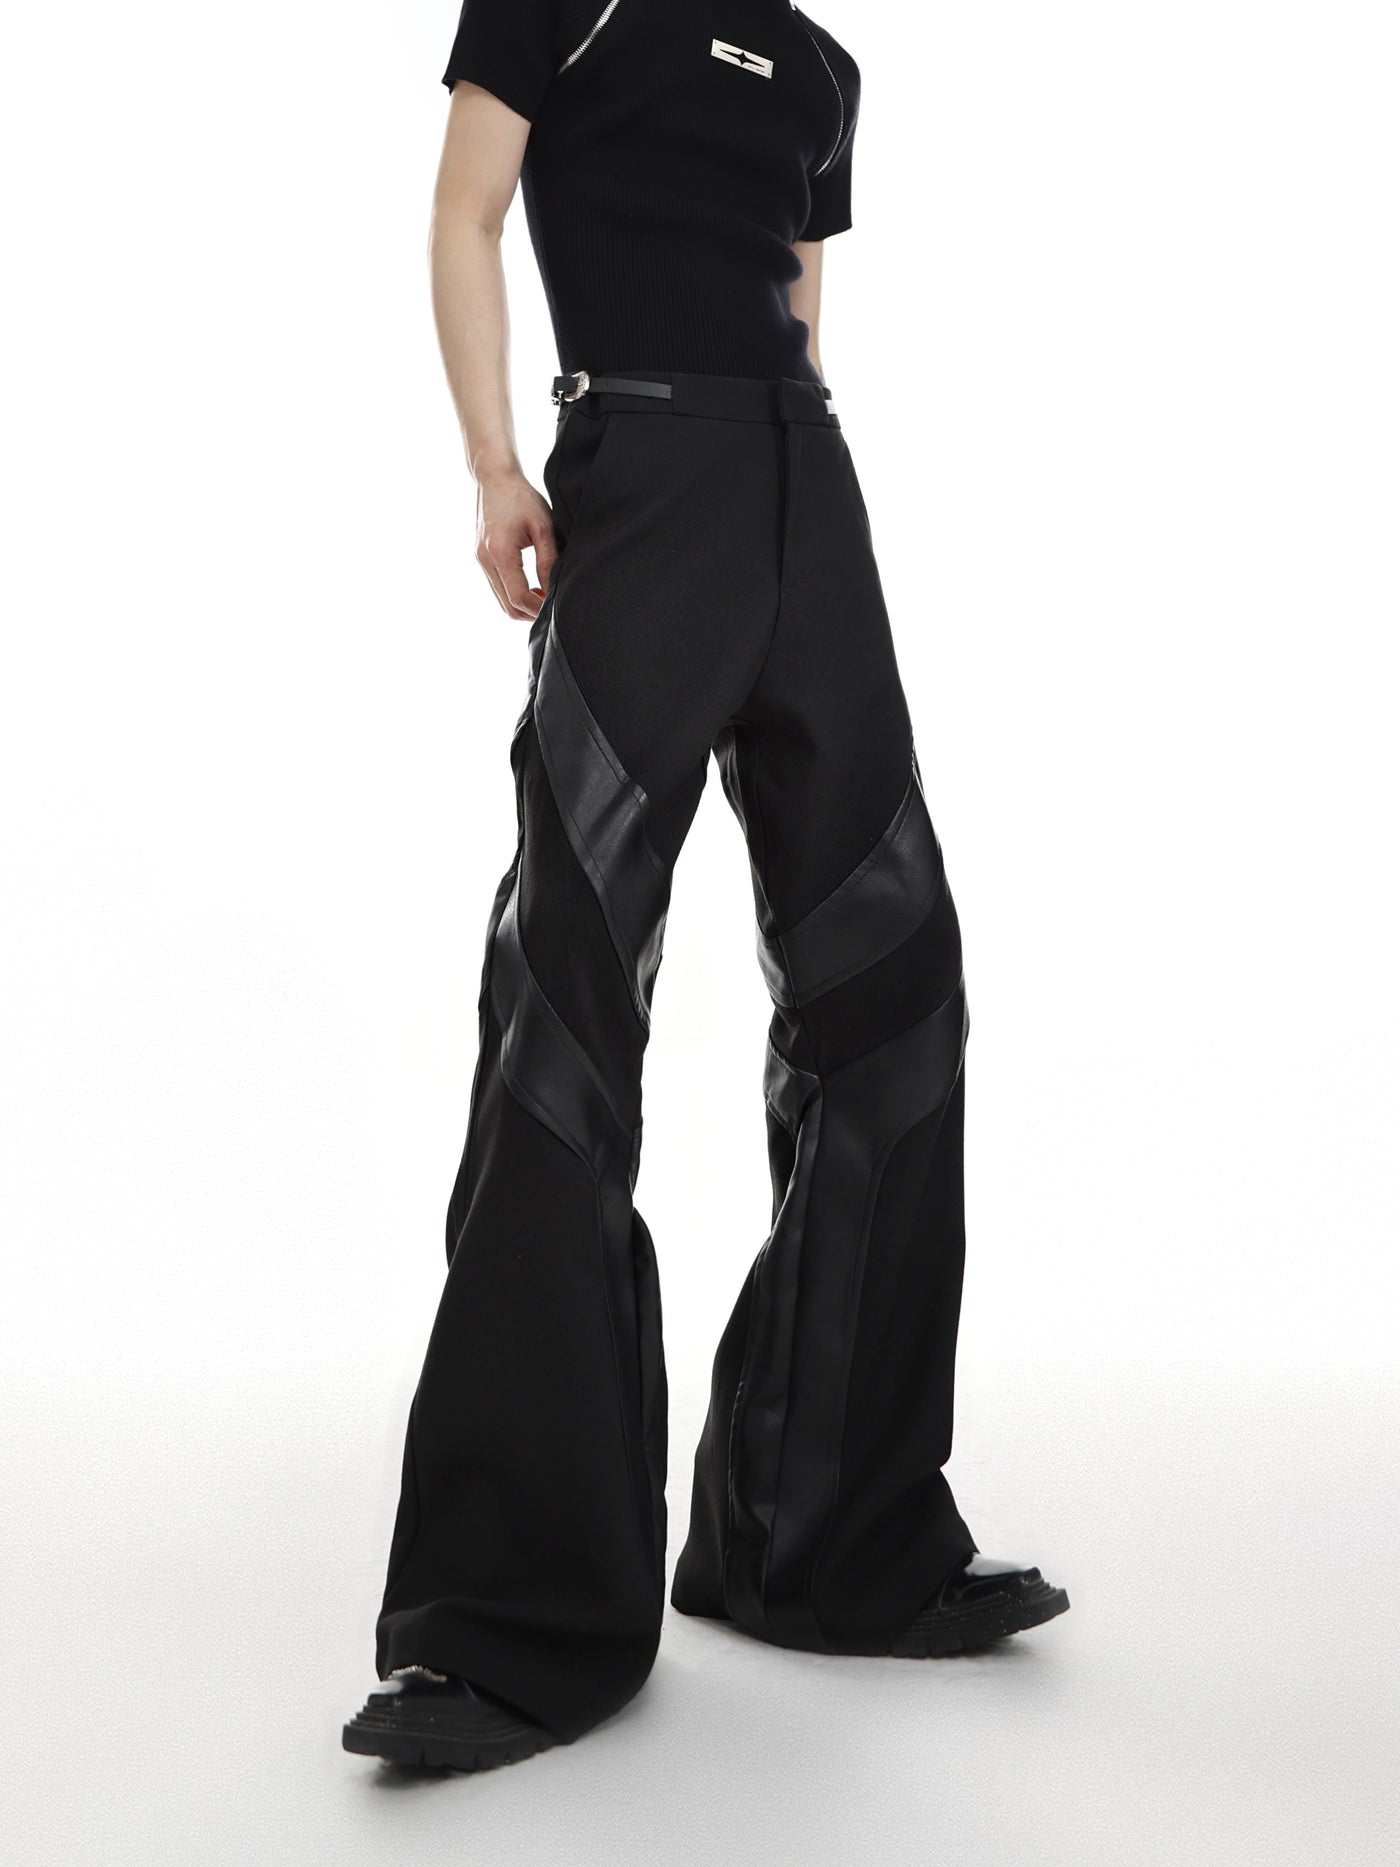 Belt Buckle Stitched Flare Leg Trousers Korean Street Fashion Pants By Argue Culture Shop Online at OH Vault